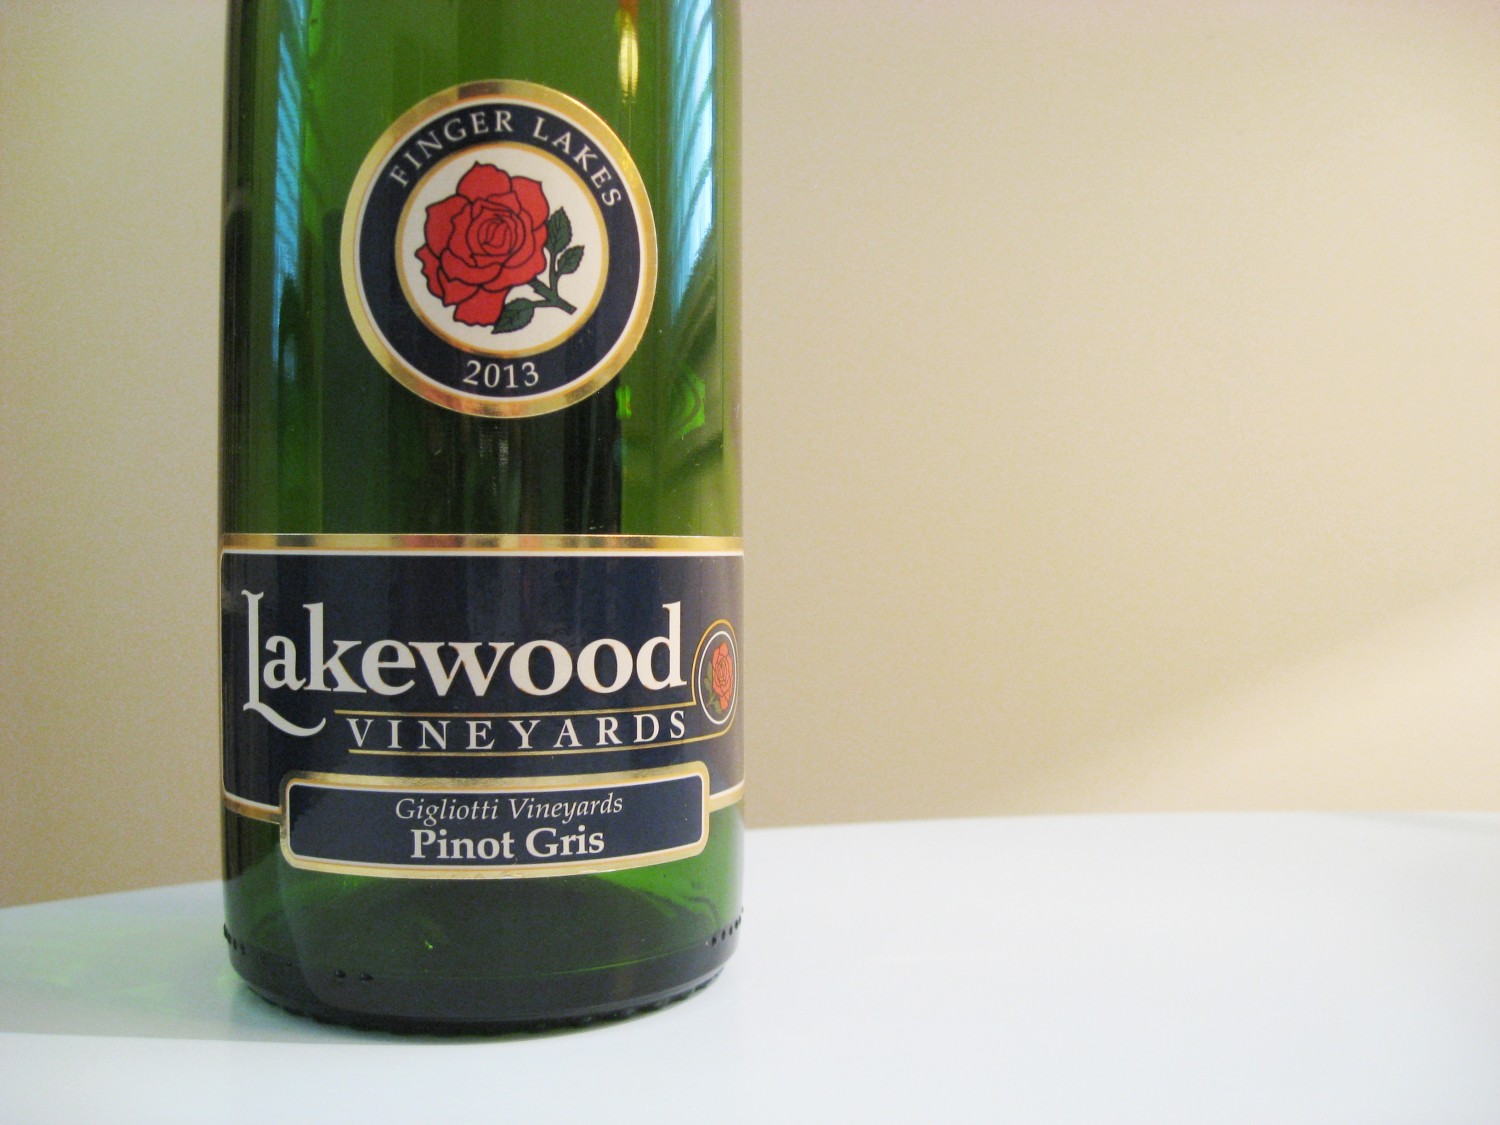 Lakewood Vineyards, Pinot Gris 2013, Gigliotti Vineyards, Finger Lakes, New York, Wine Casual